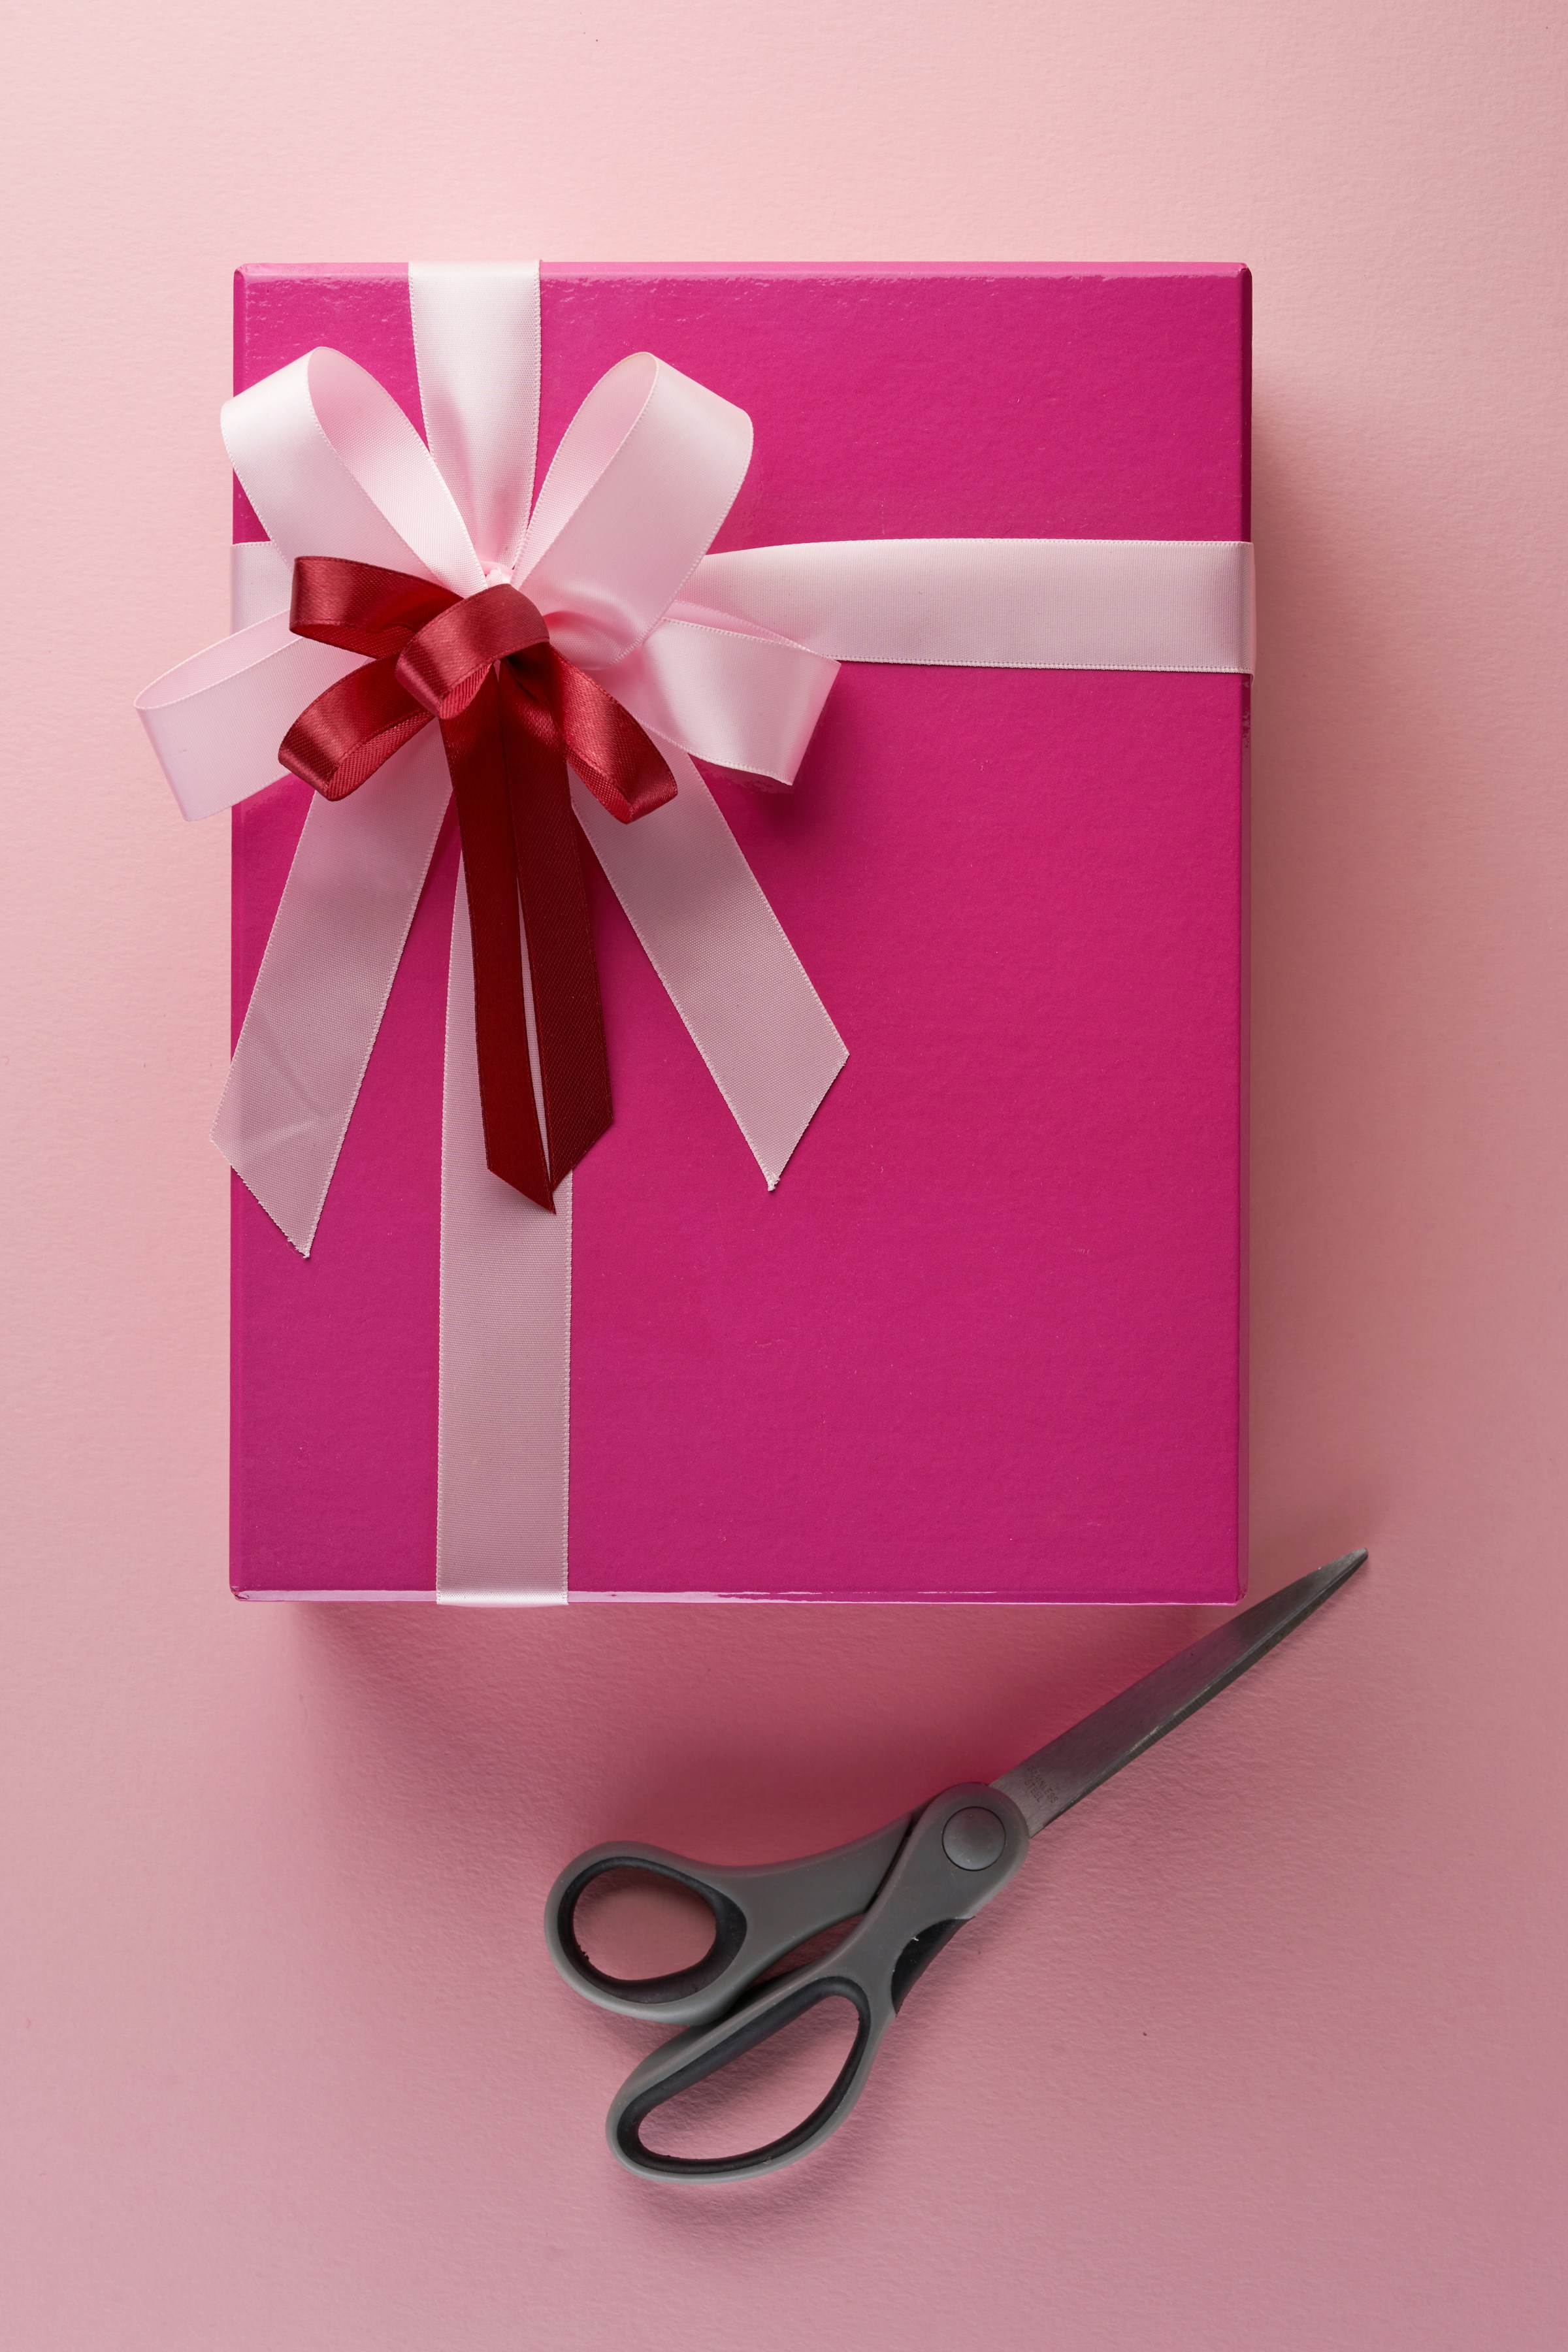 A pink gift box | Source: Unsplash